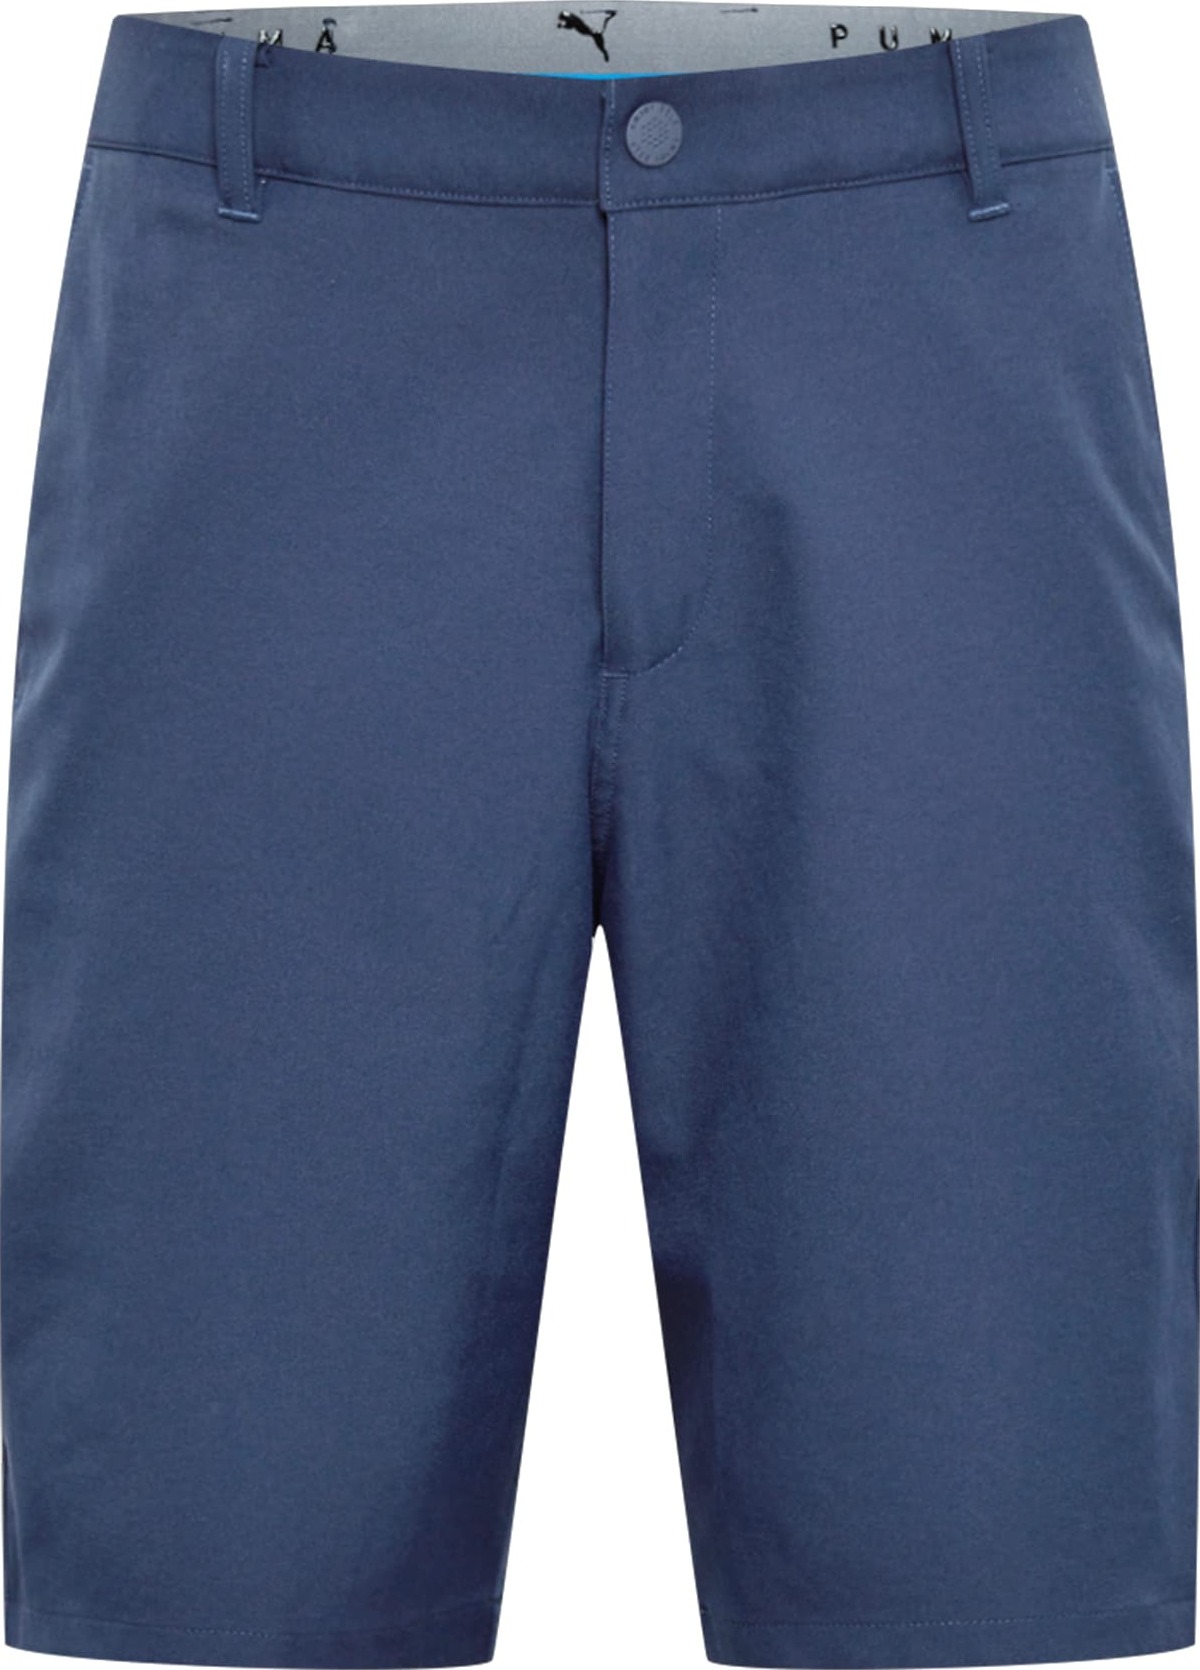 PUMA Chino kalhoty 'Jackpot' modrá